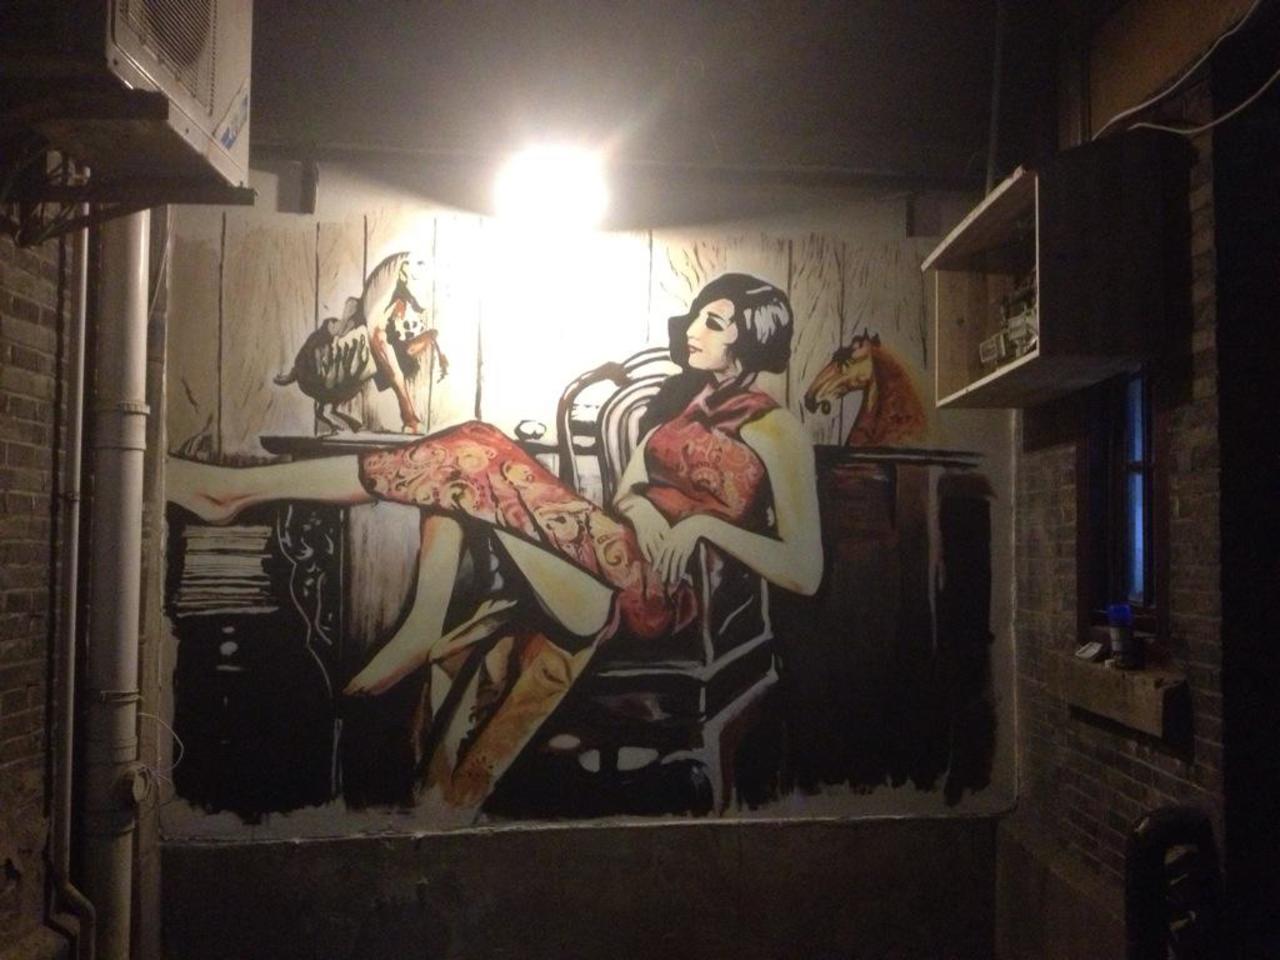 RT @Livesabroad1: Shanghai #streetart is dope! 
#shanghai #china #graffiti #travel #art http://t.co/RXYzXYJHh0